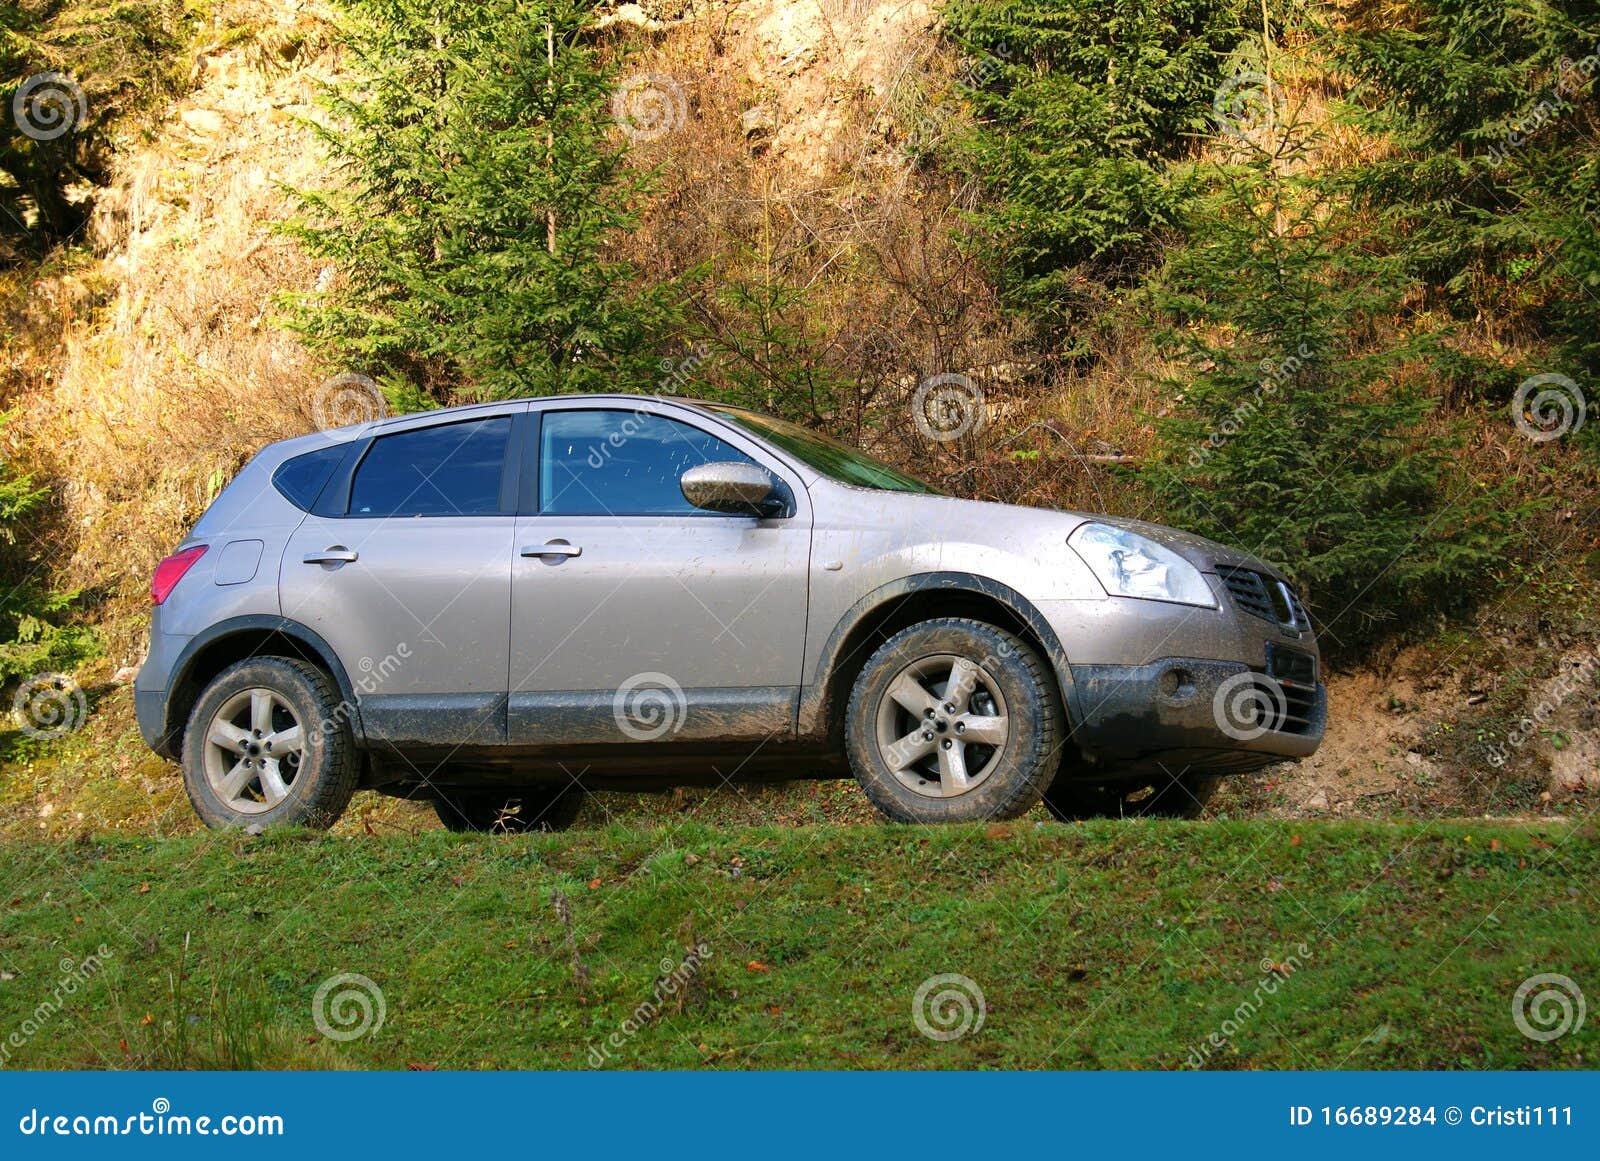 terrain car in mud